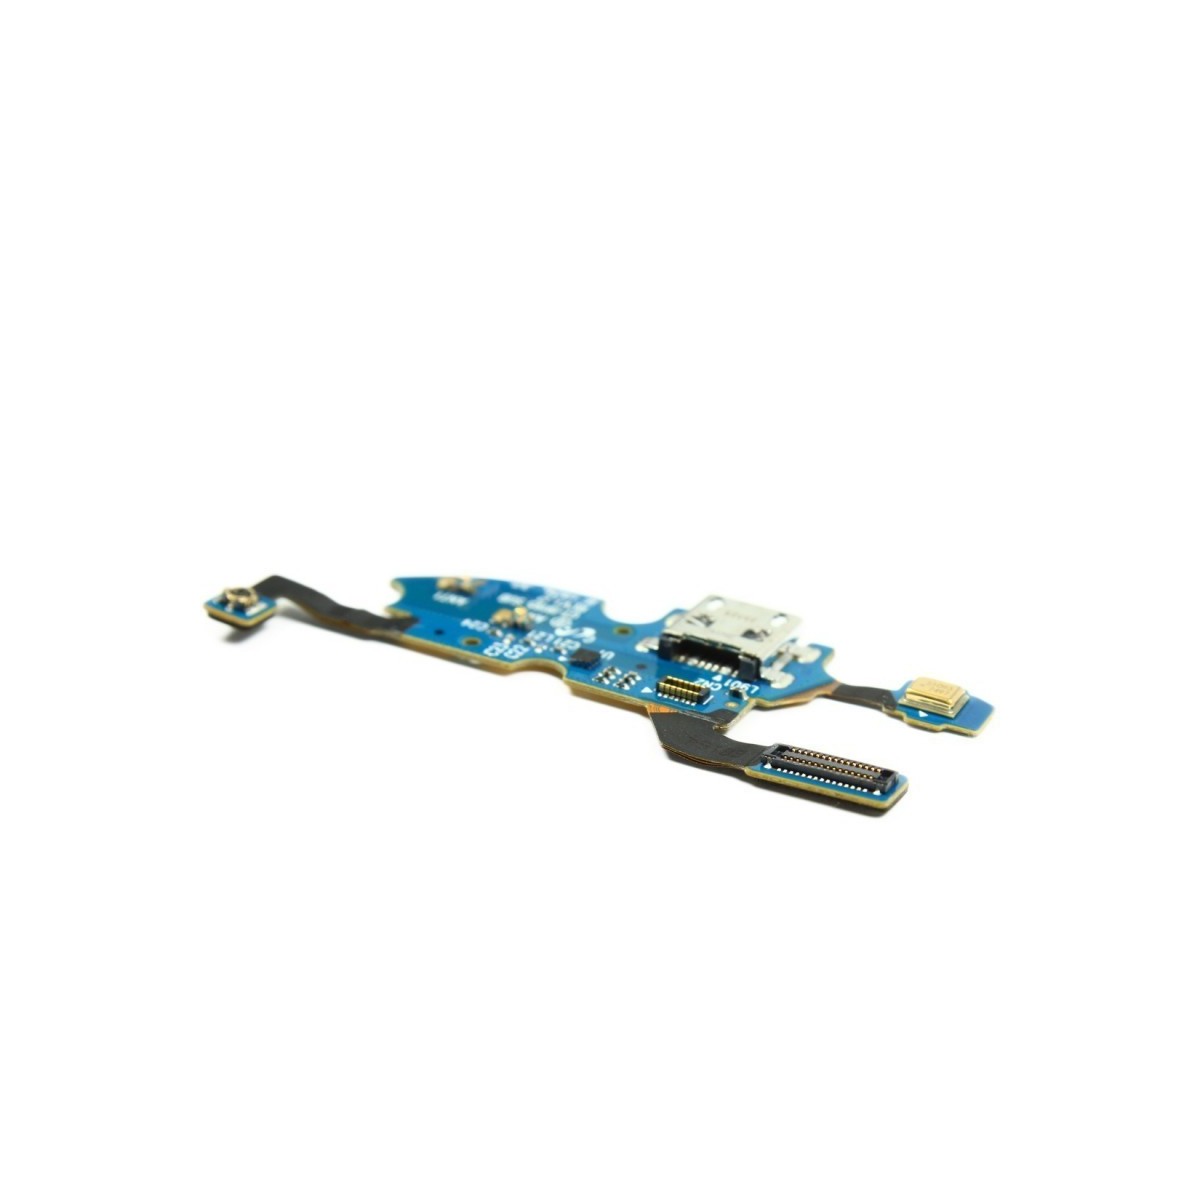 NAPPE CONNECTEUR DE CHARGE USB DOCK SAMSUNG GALAXY S4 MINI (GT-I9195)